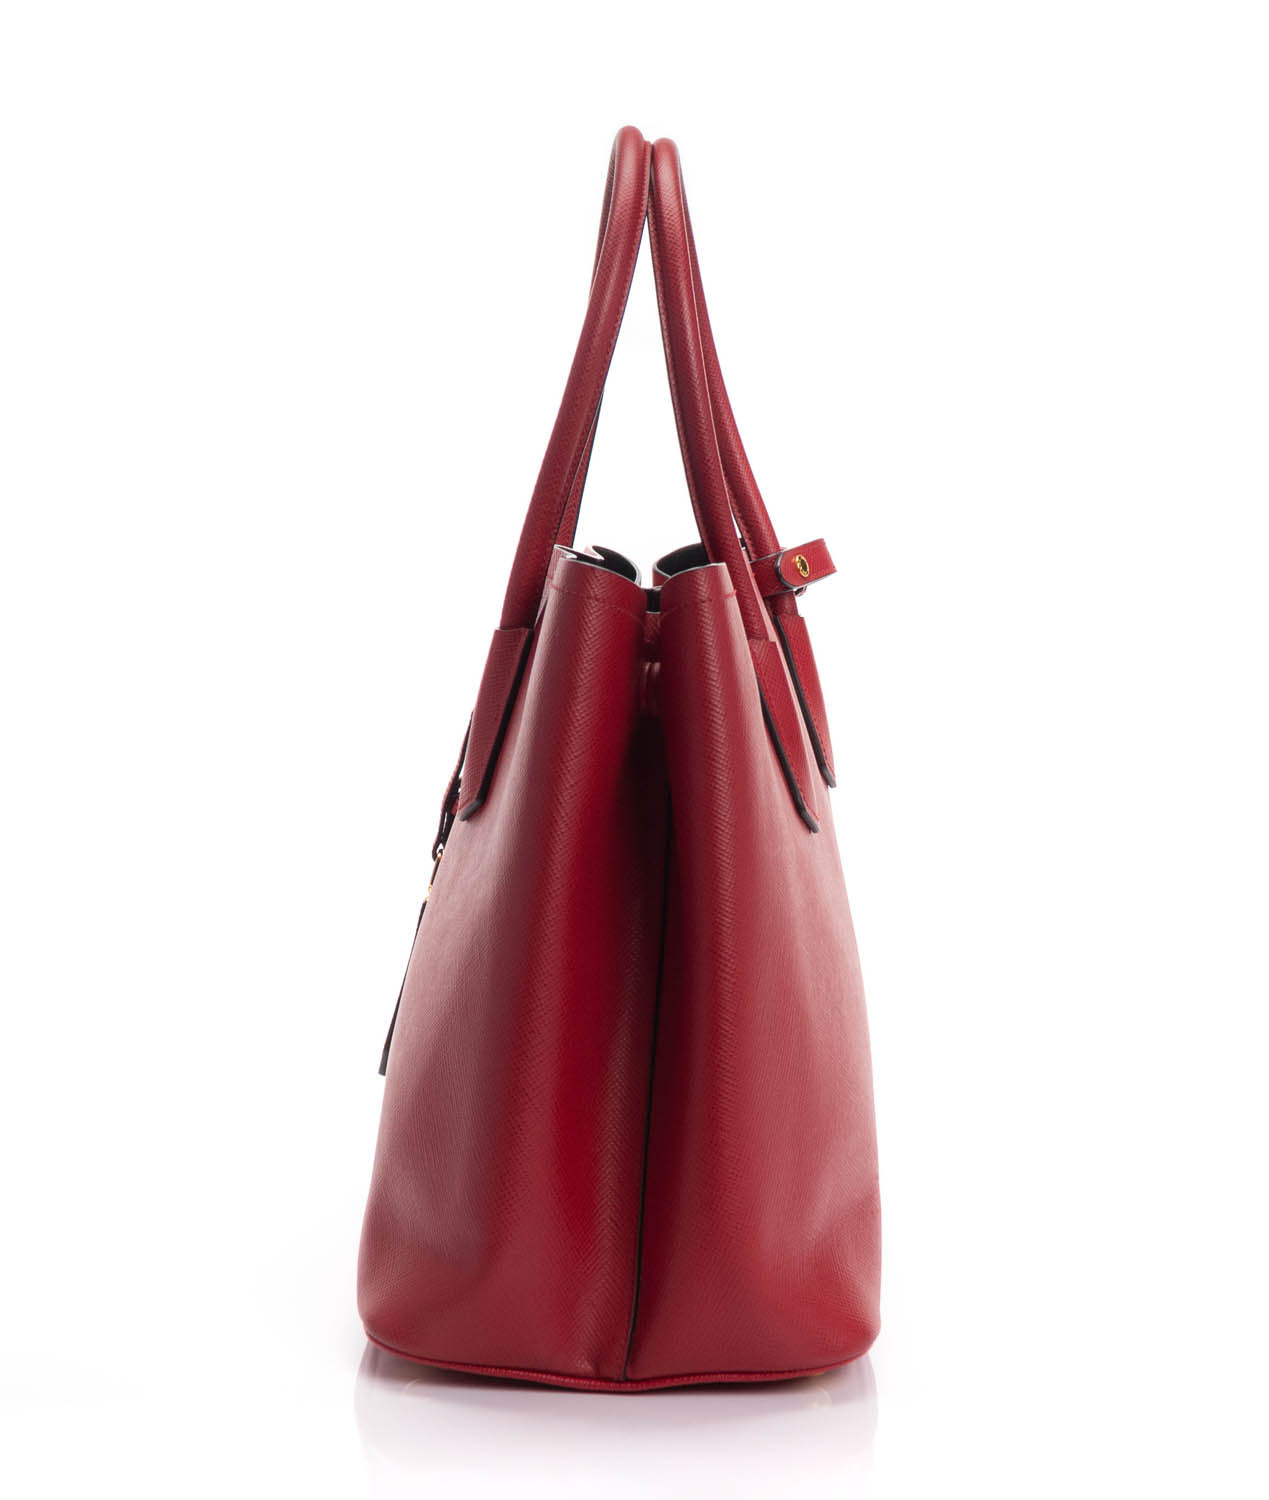 PRADA Saffiano Cuir Large Double Bag Bleuette 1302572